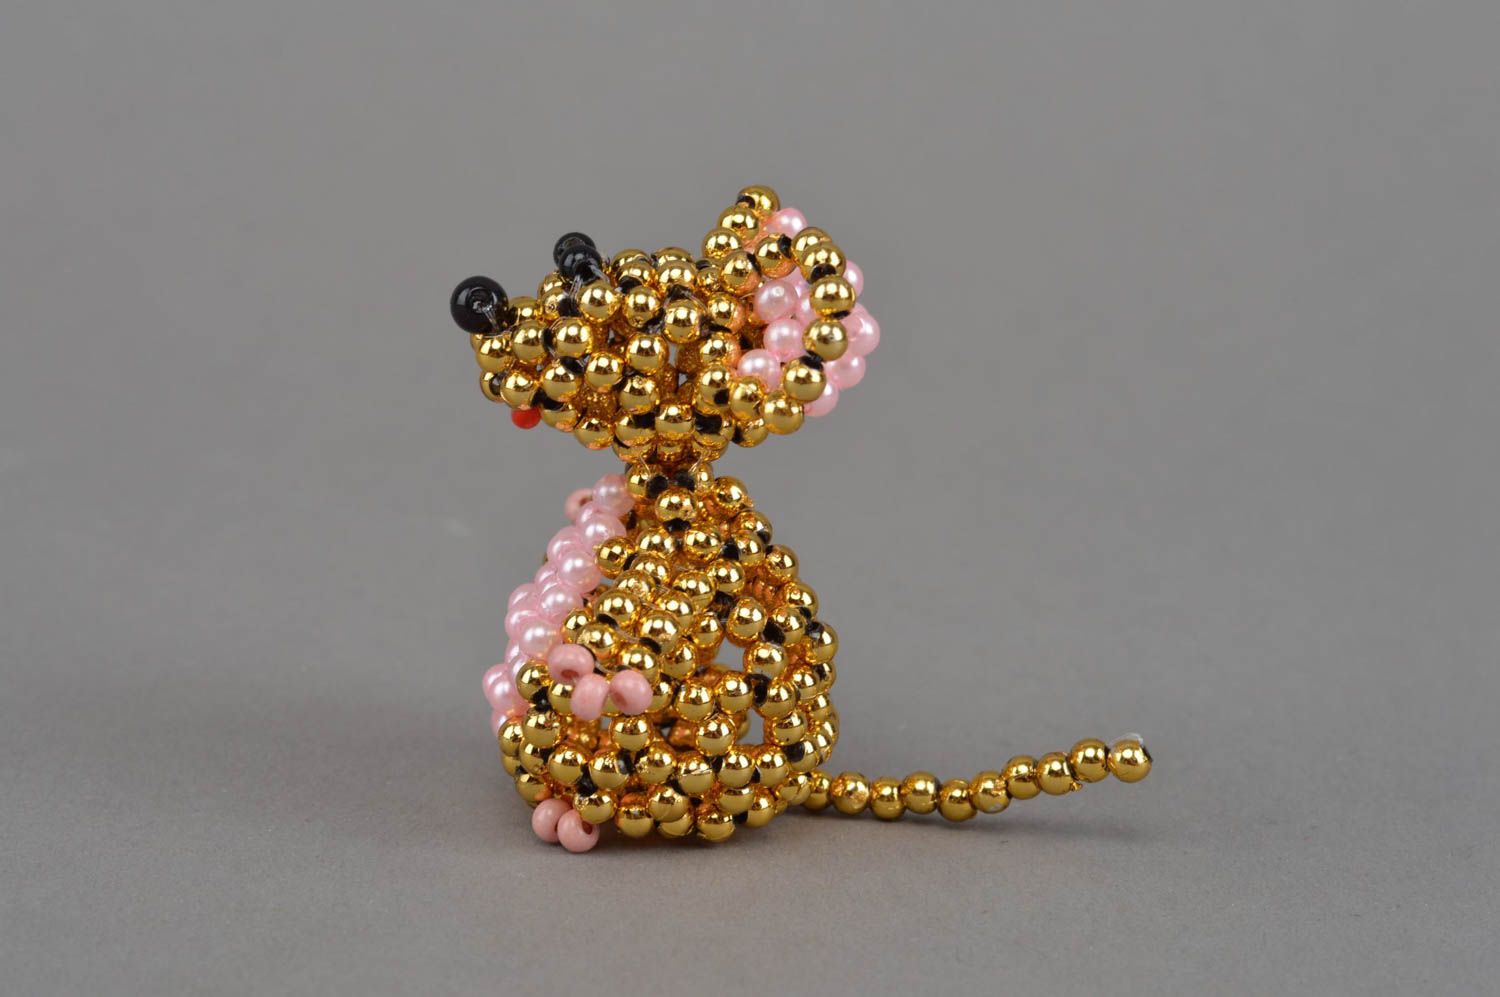 Handmade miniature collectible bead woven animal figurine of golden mouse photo 4